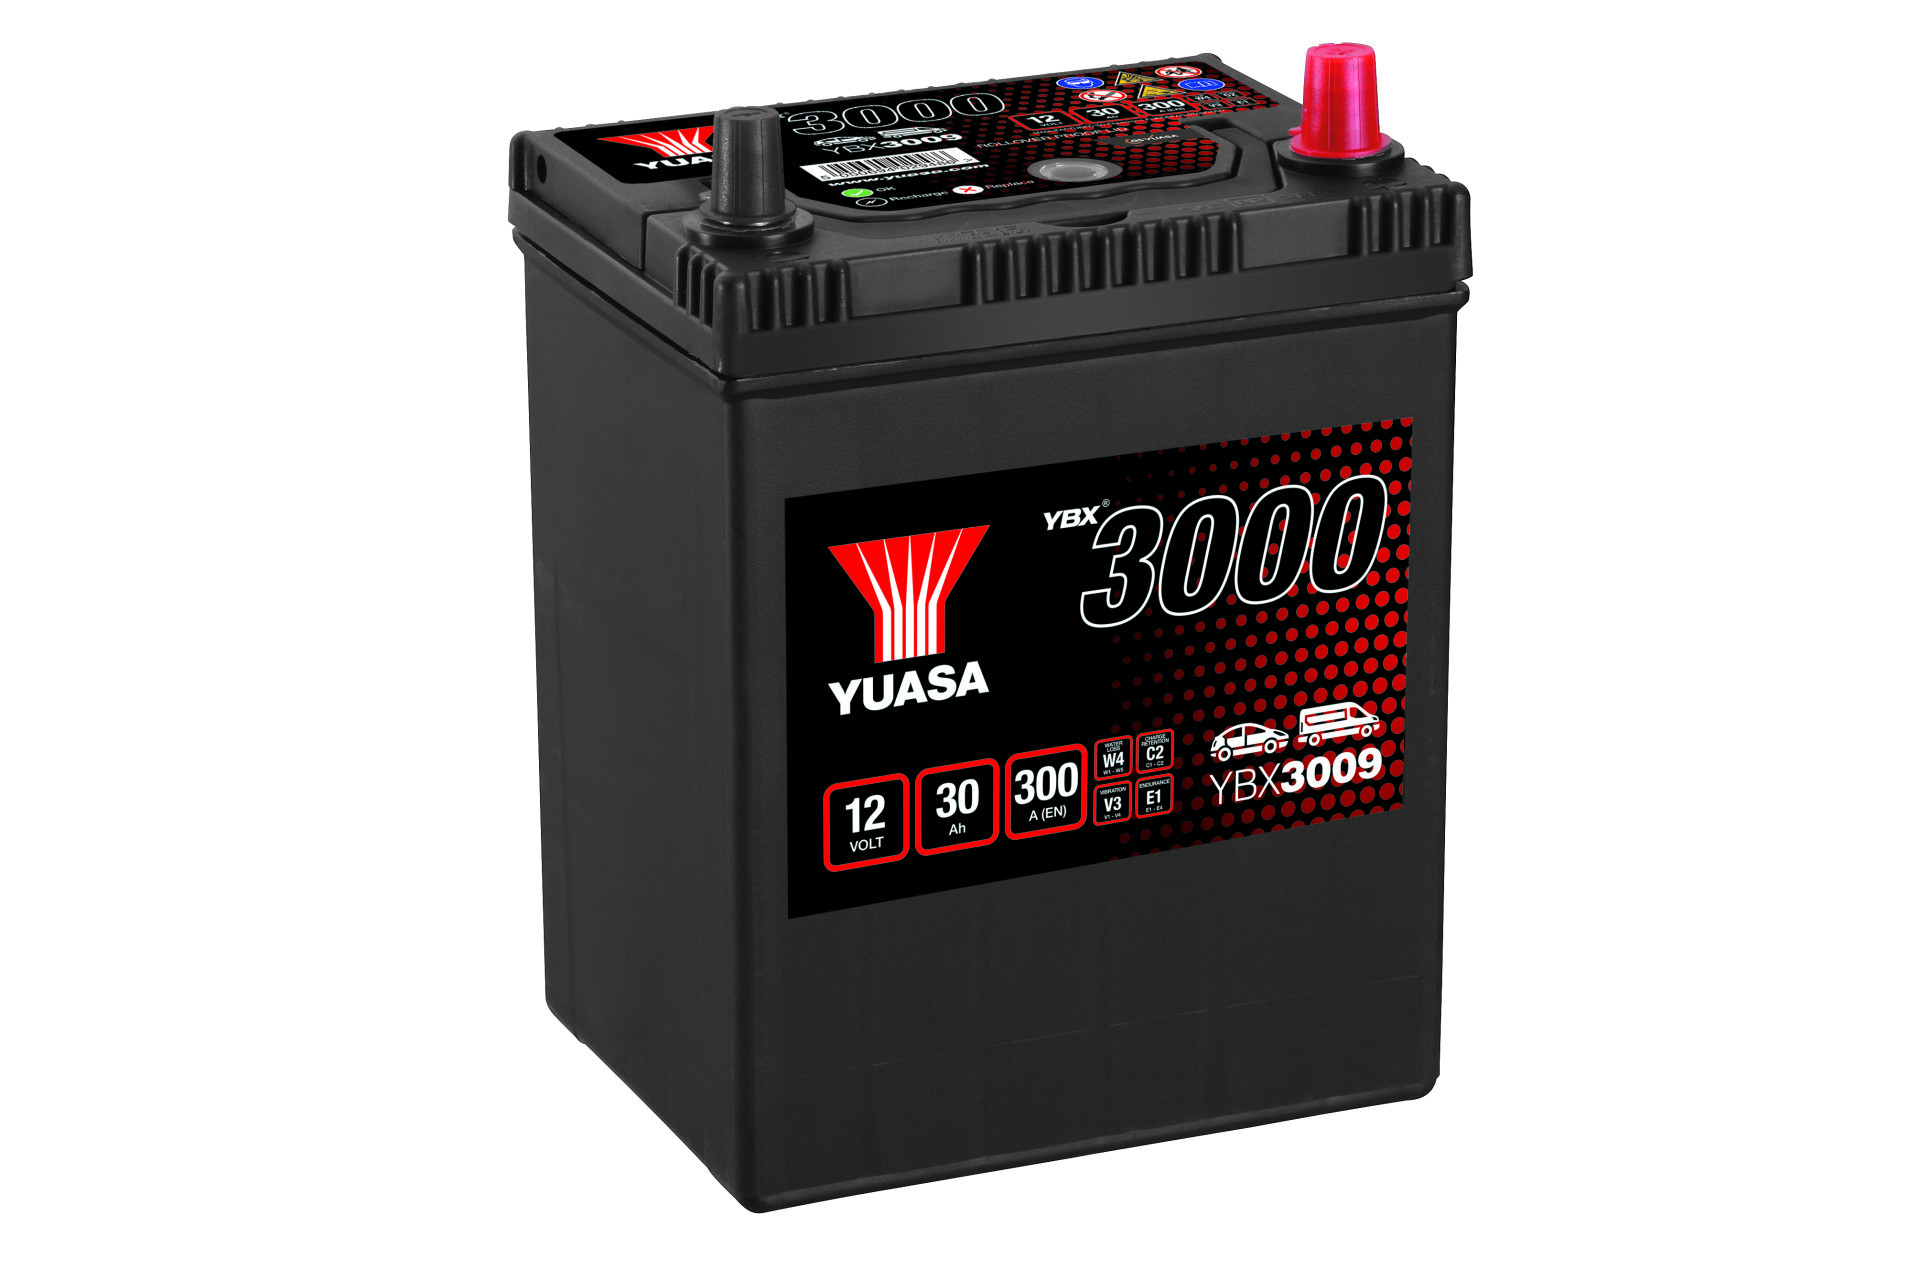 YUASA Autobatterie, Starterbatterie 12V 30Ah 300A 1.734L